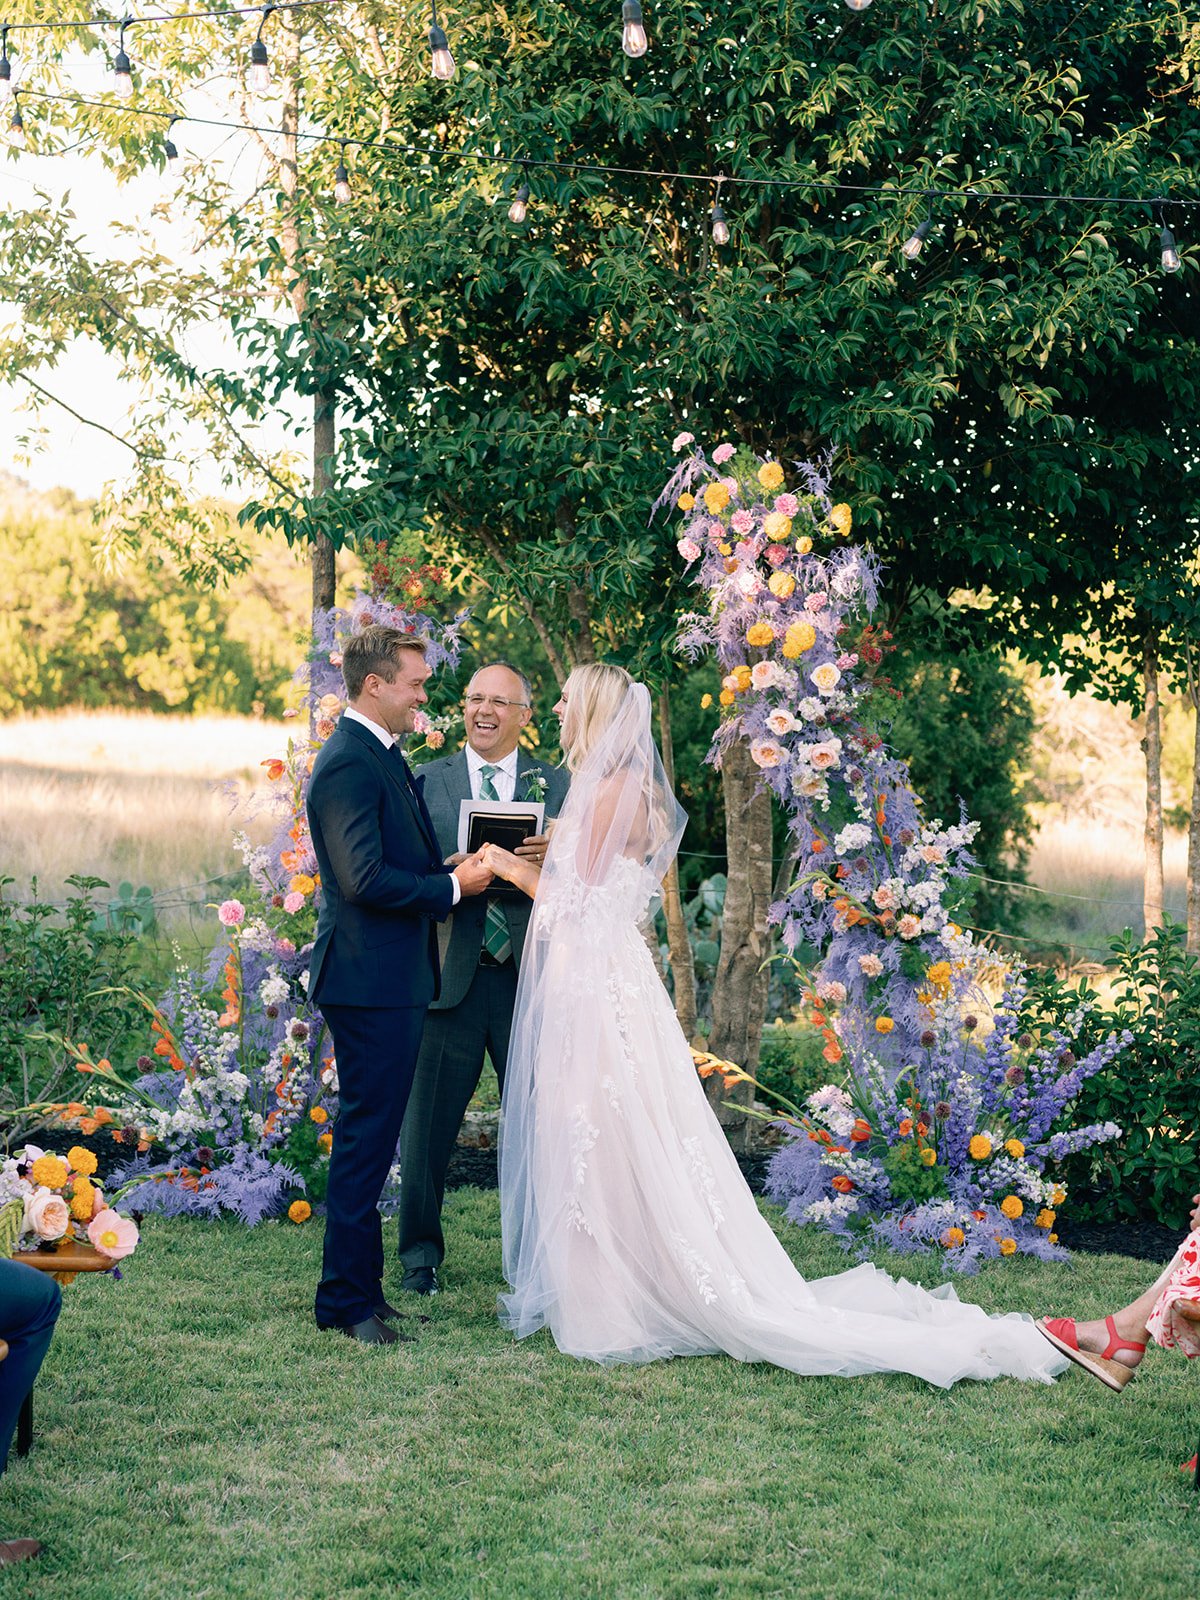 Best-Austin-Wedding-Photographers-Elopement-Film-35mm-Asheville-Santa-Barbara-Backyard-45.jpg